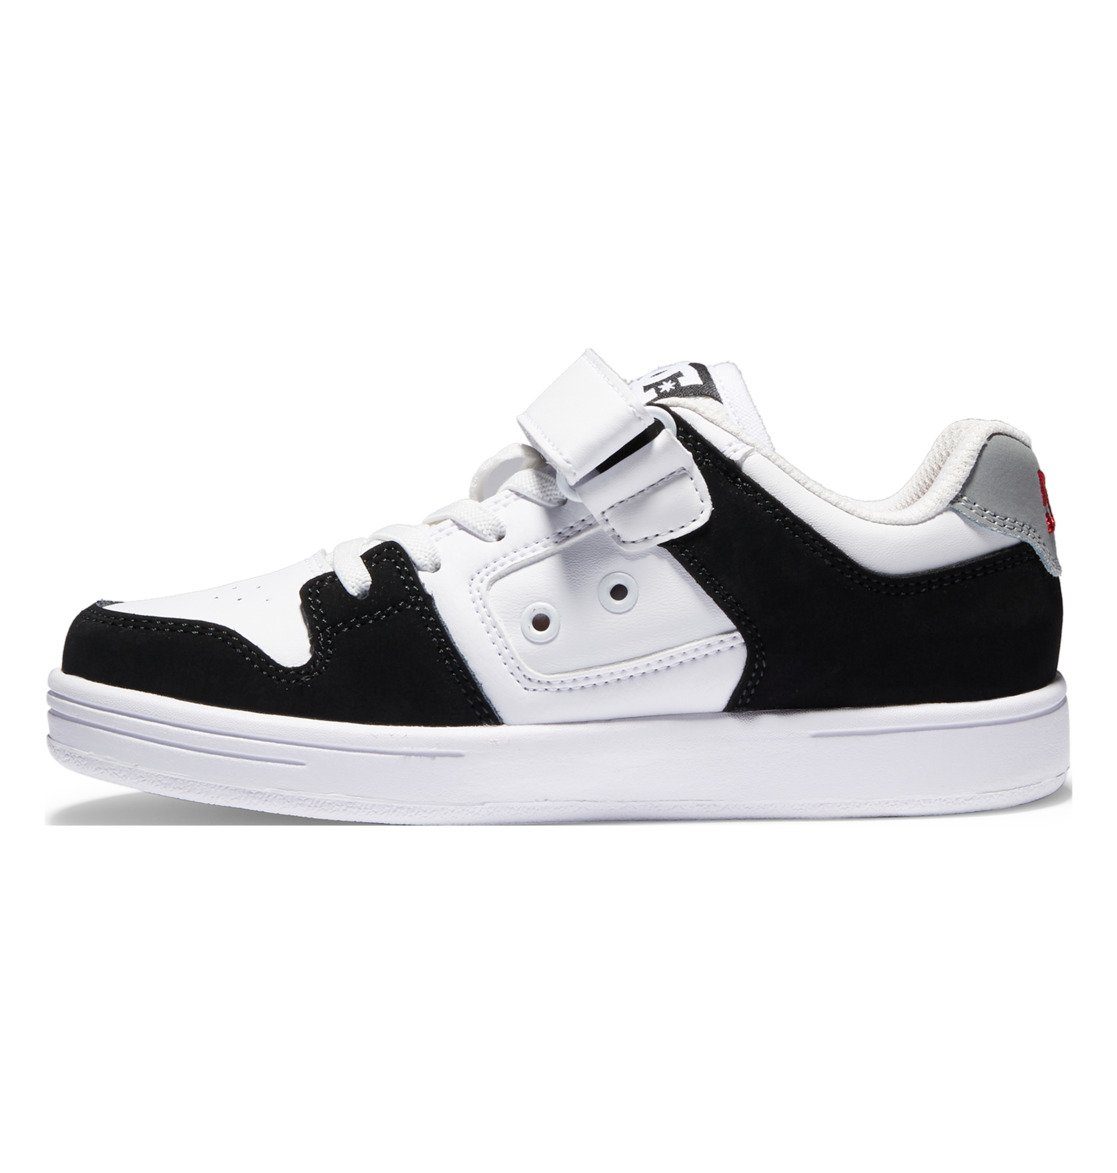 Manteca Shoes V 4 DC Black/White/Red Sneaker